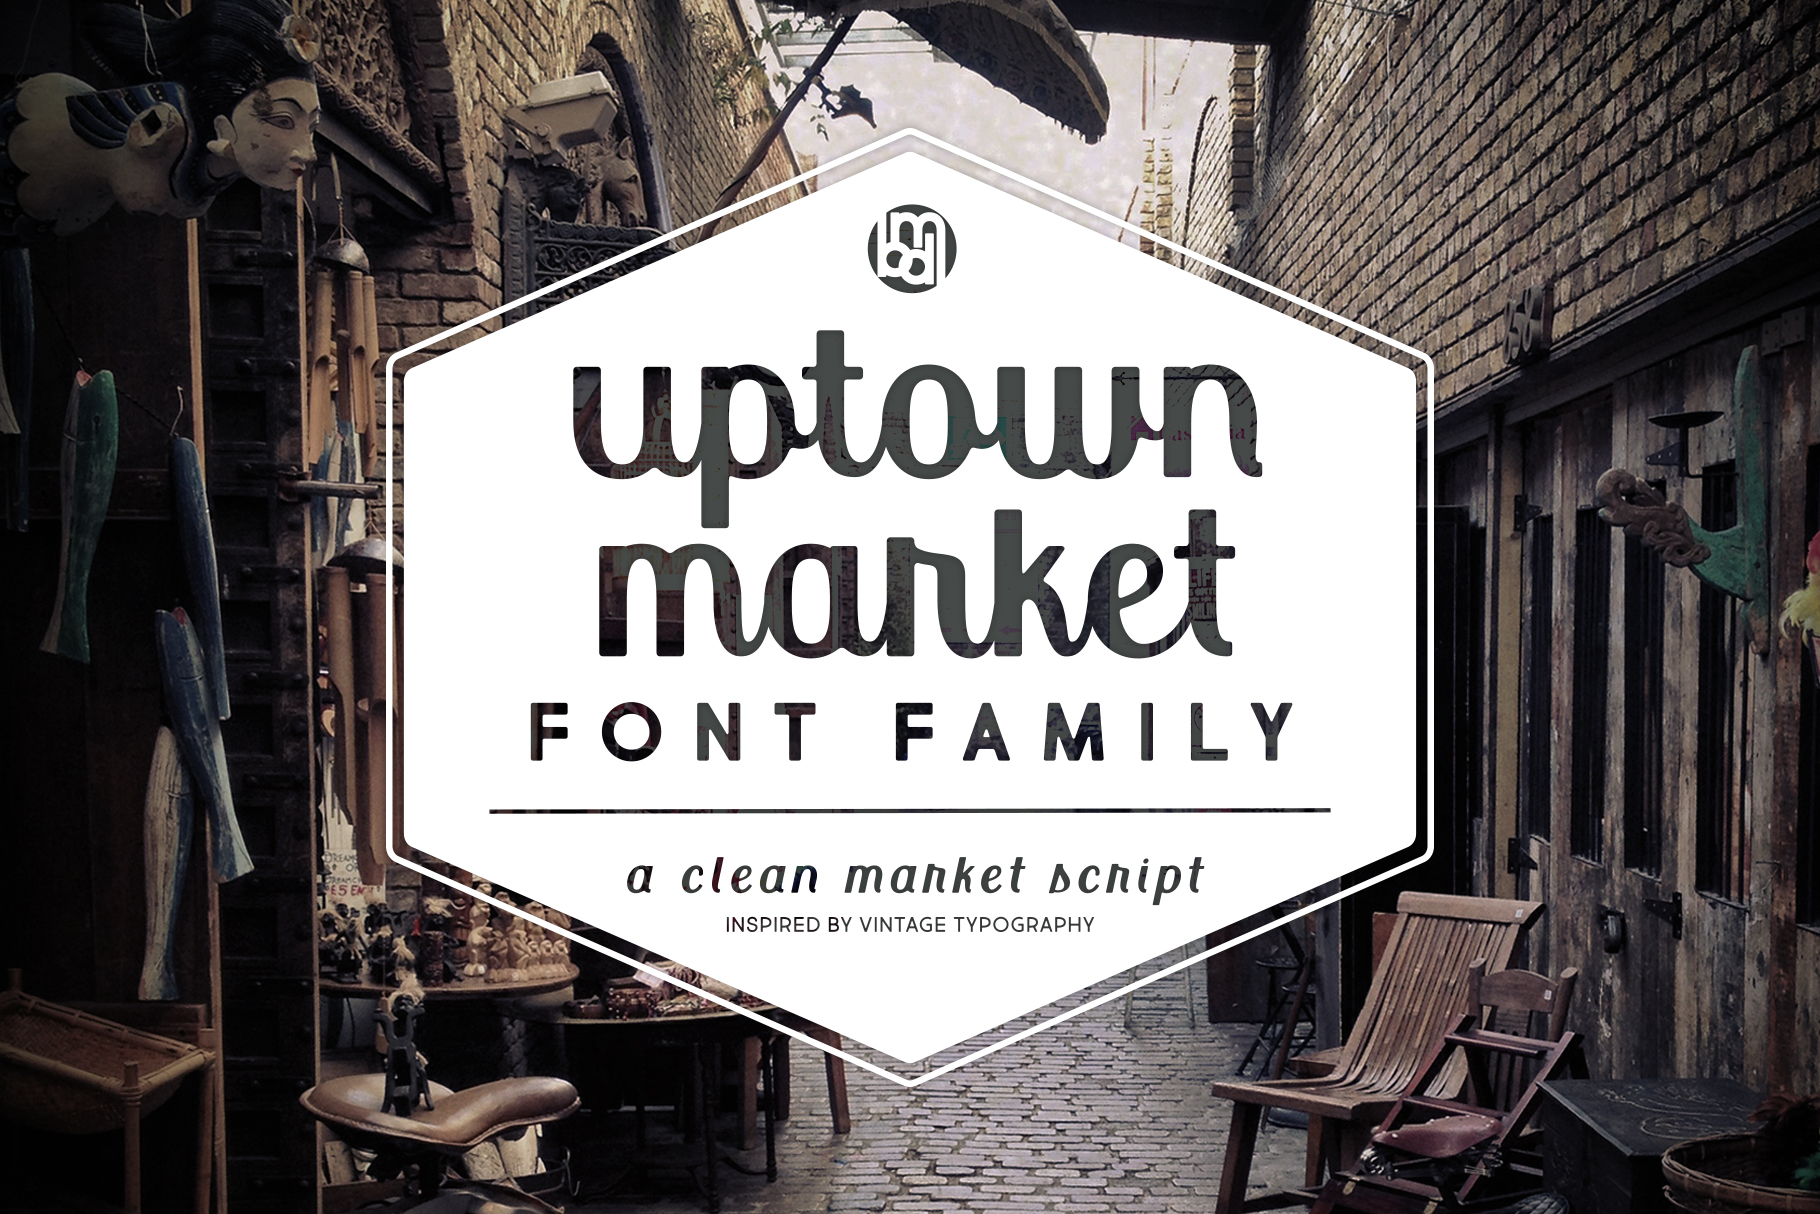 Uptown Market font